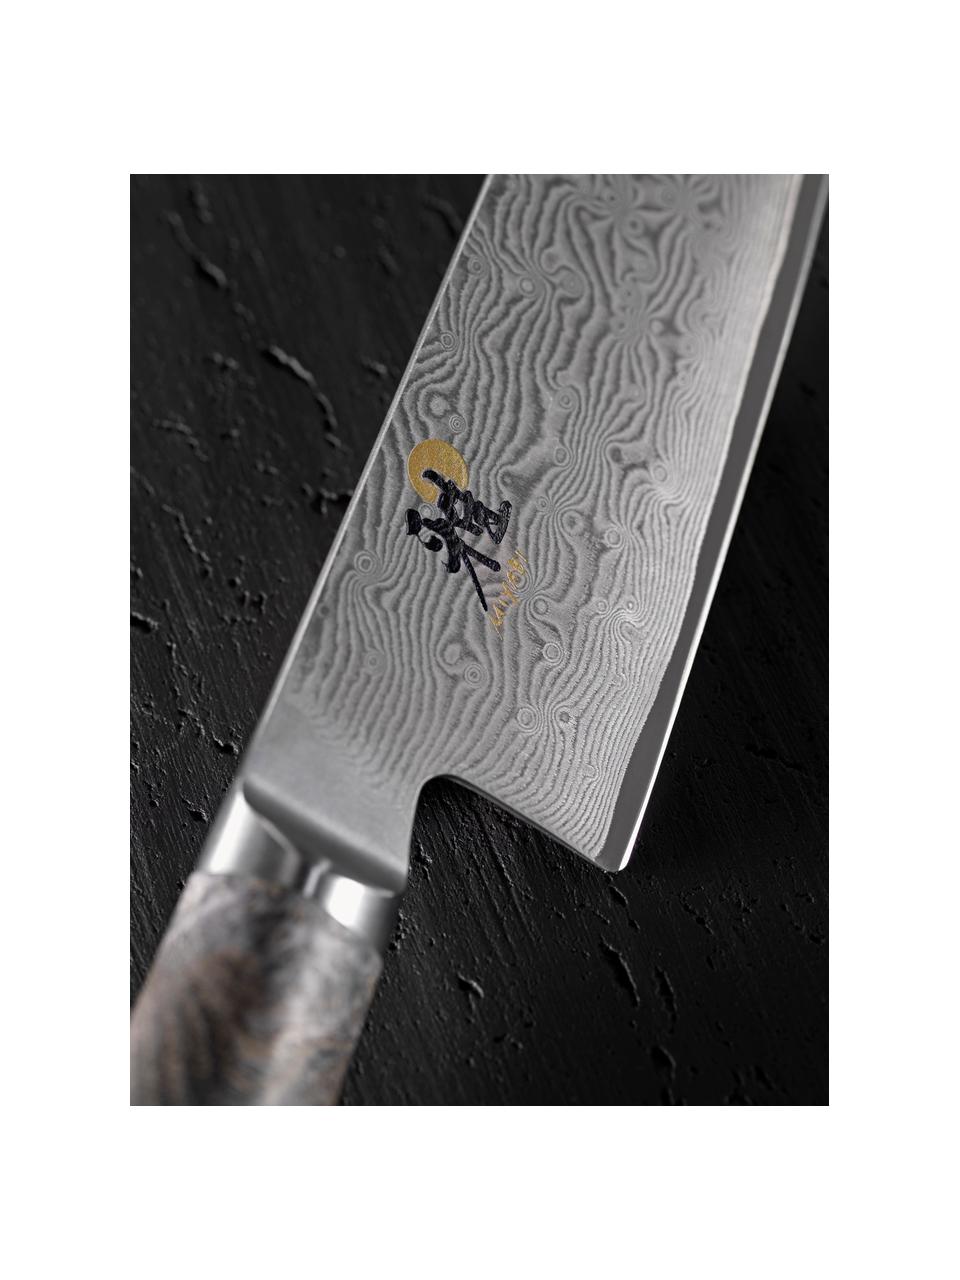 Cuchillo Gyutoh Miyabi, Plateado, greige, L 34 cm